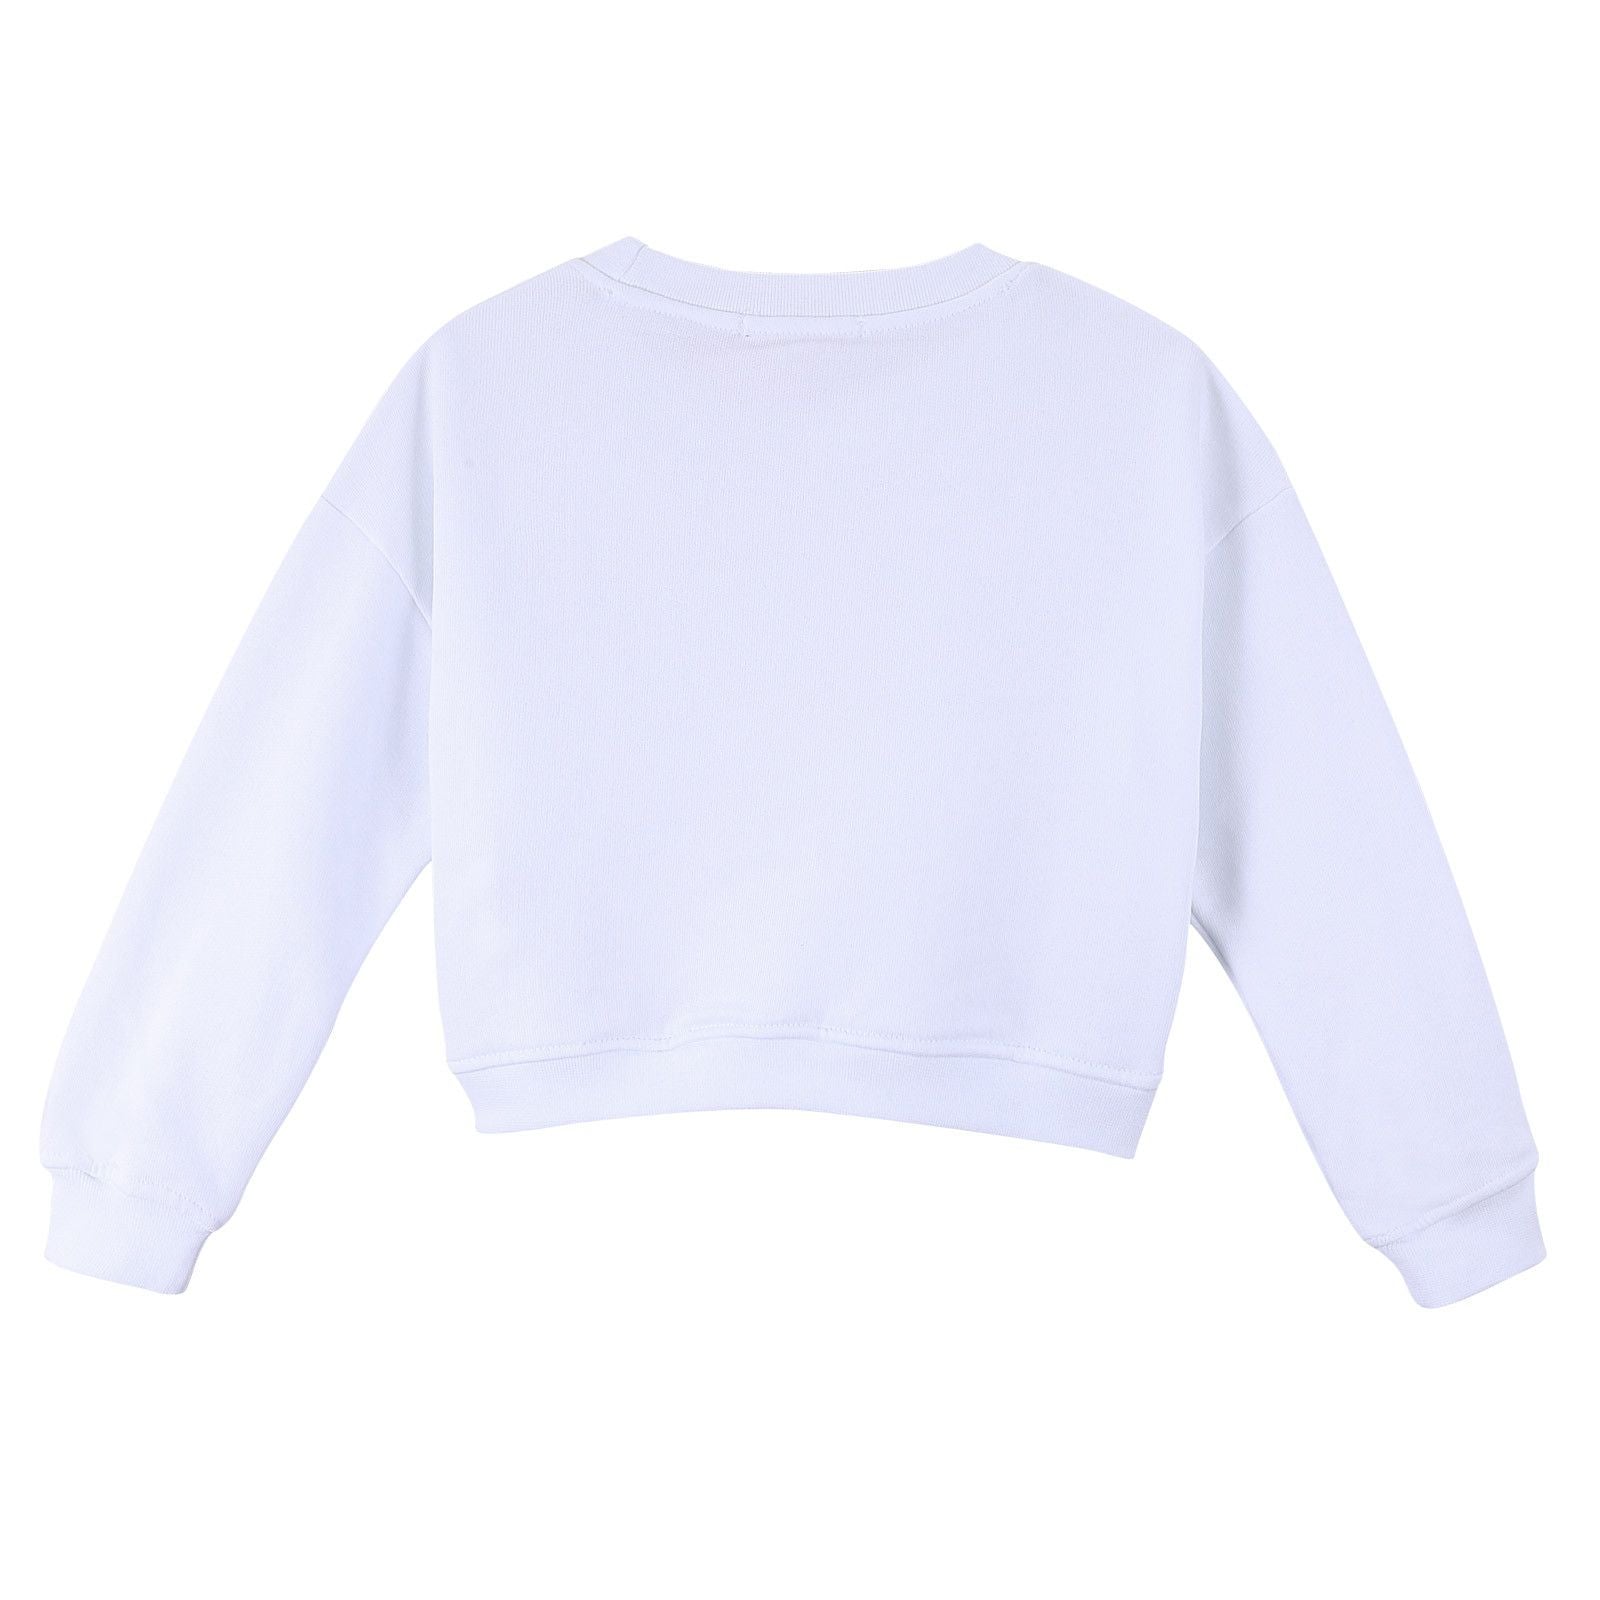 Girls White Cotton Sweater With Brand Name Logo - CÉMAROSE | Children's Fashion Store - 2